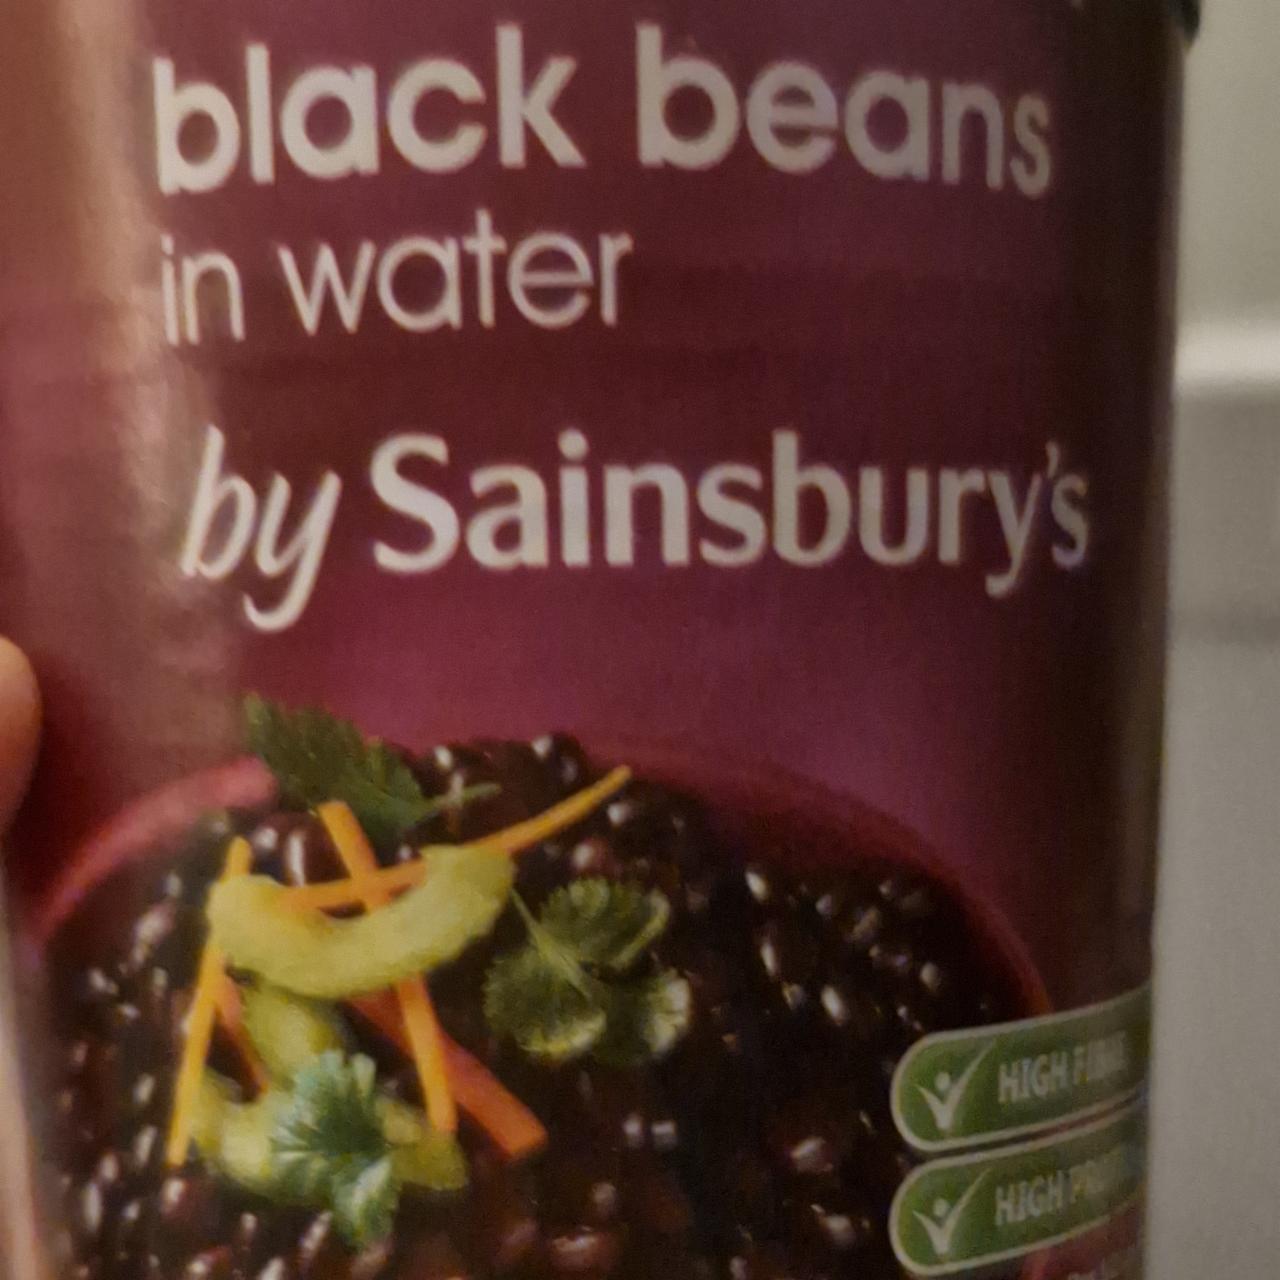 Fotografie - Black beans in water by Sainsbury's